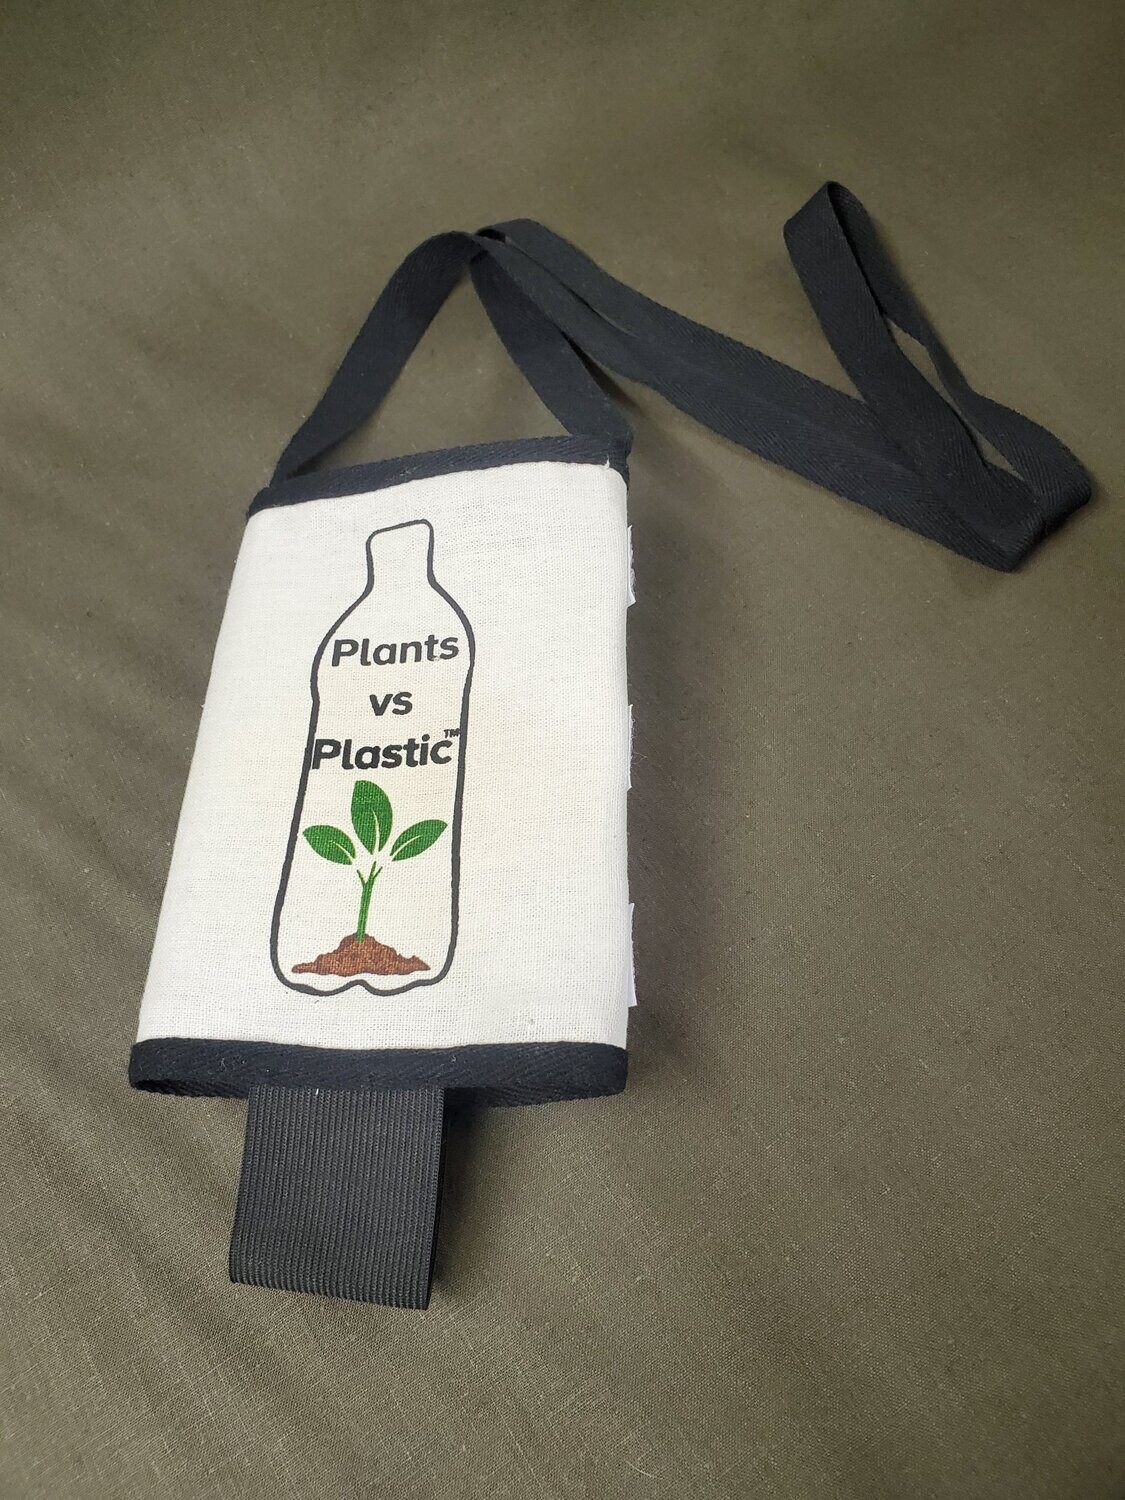 Plants Vs. Plastic (Print) Water Bottle Carrier